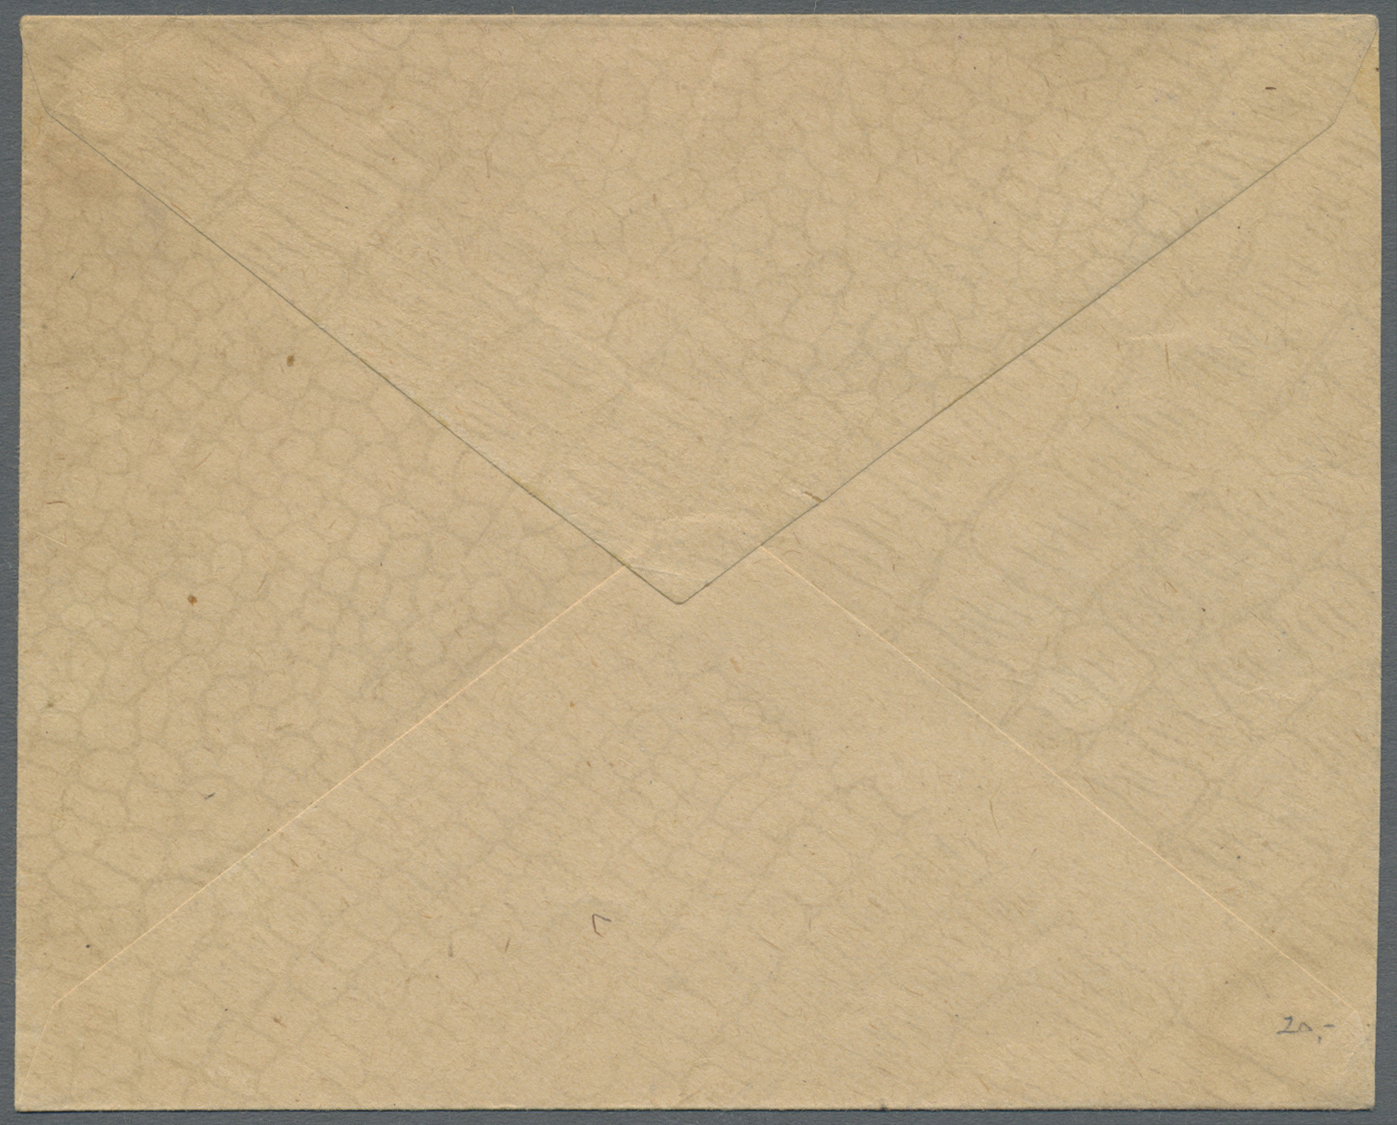 Br Estland - Stempel: 1919. Scott 1 - 4, Locally Perforated, Tied By Linear Violet "Tallin", Circular "TALLIN B 7 - Estonia